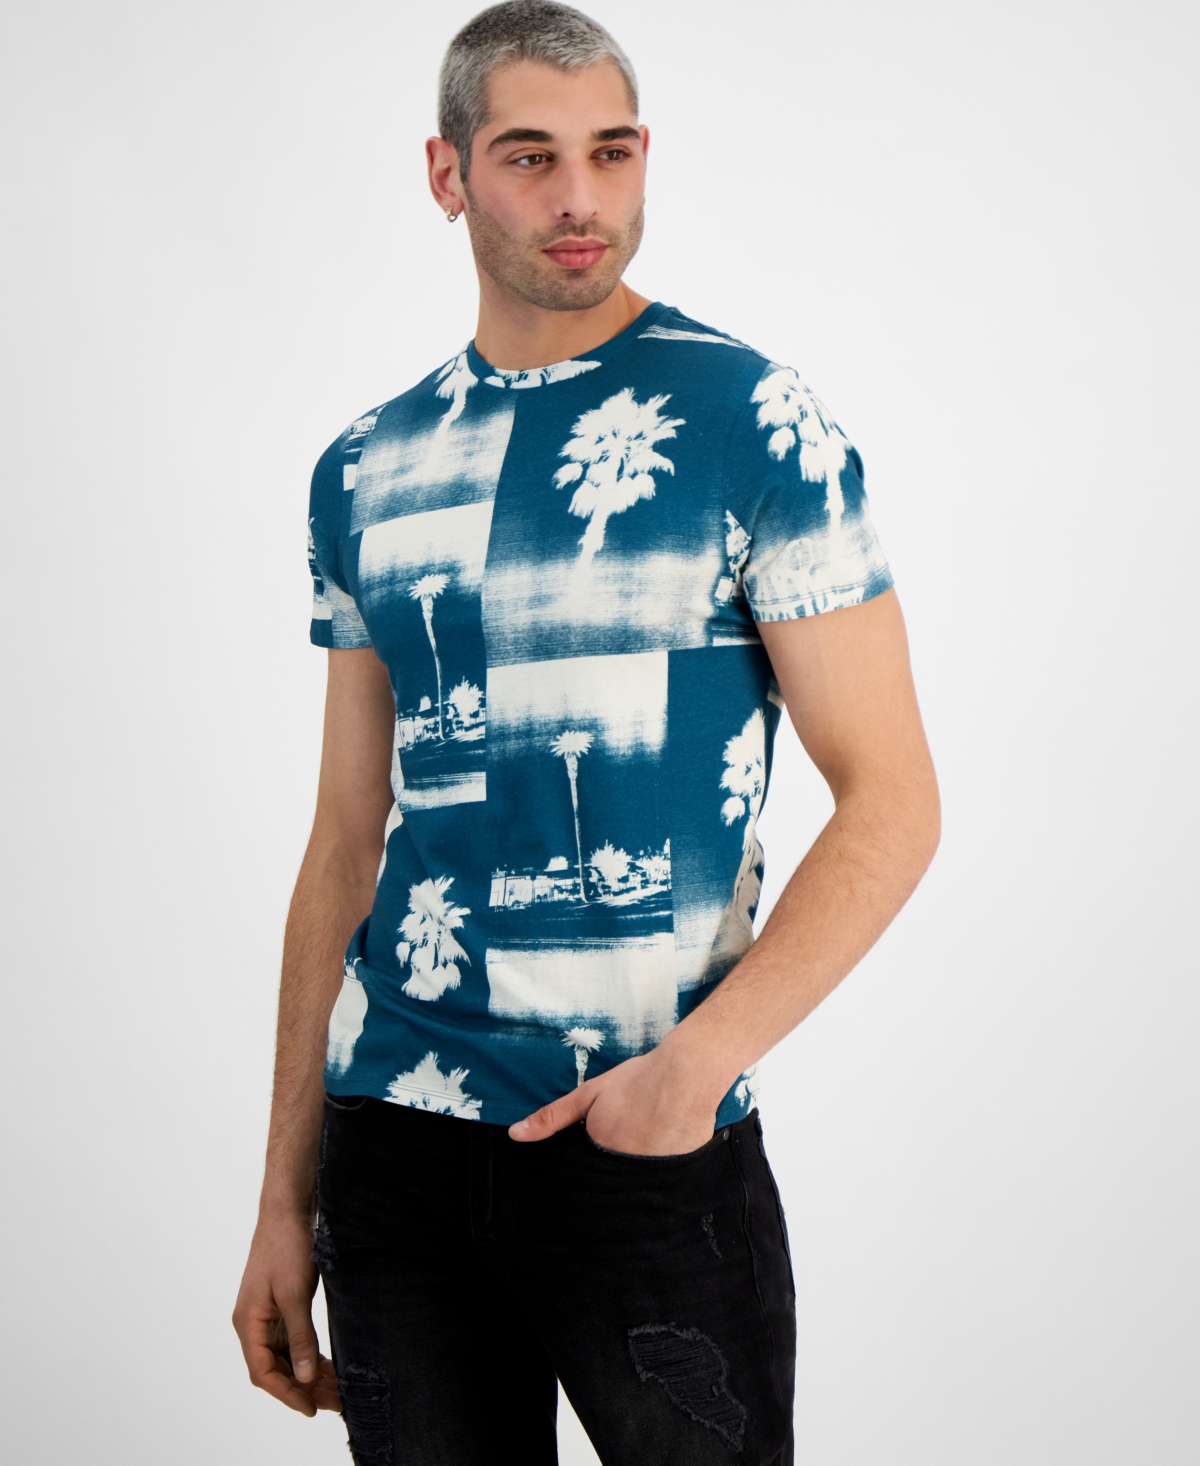 Men's Basic Los Angeles Palms Tree Short Sleeve T-shirt - Sea of Jade